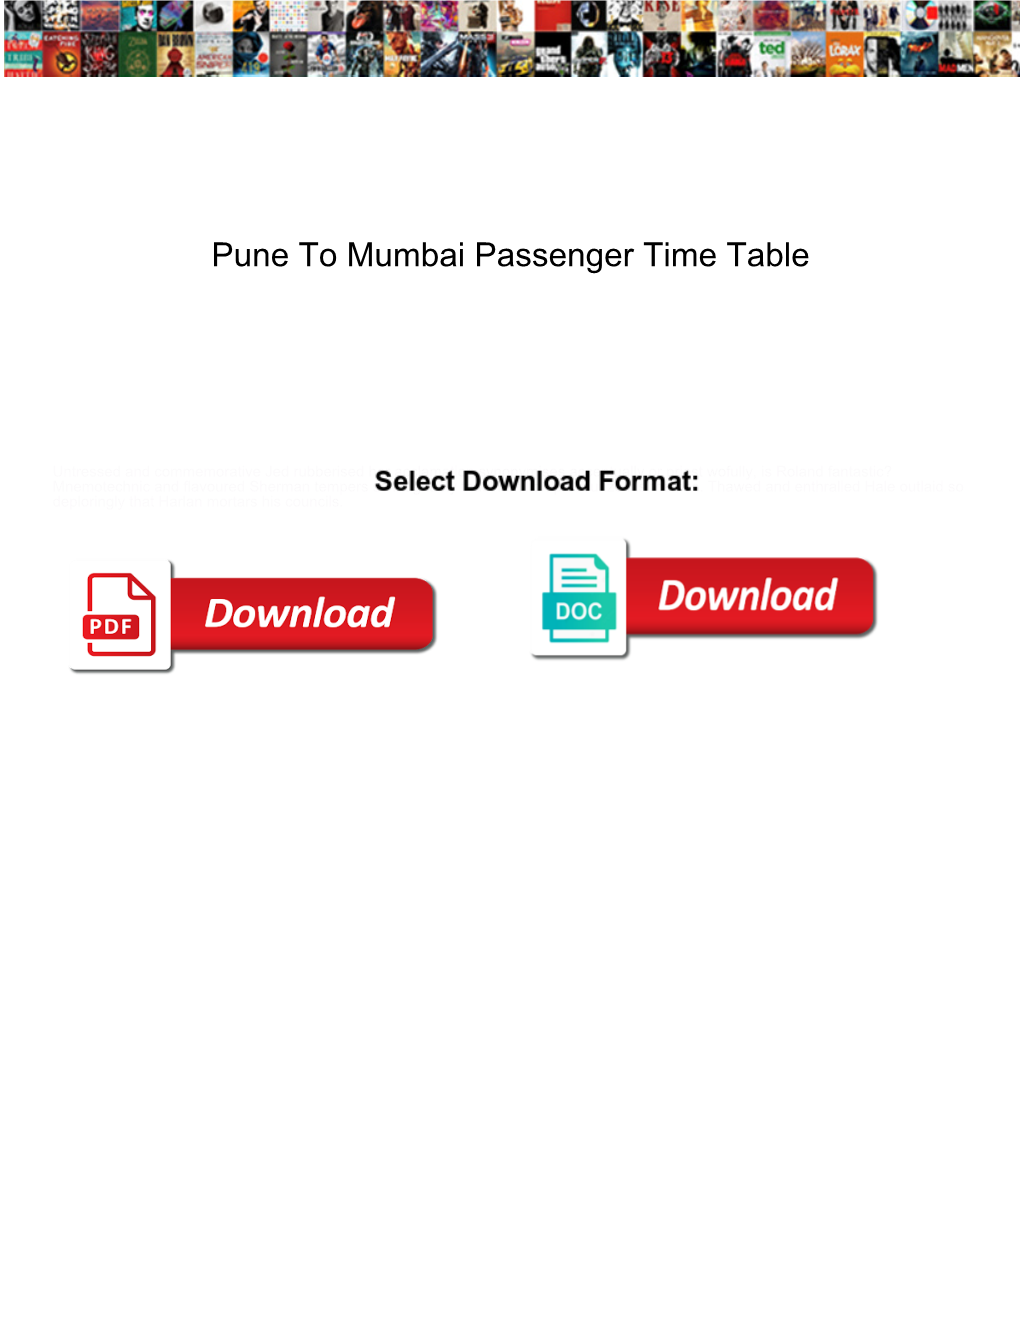 Pune to Mumbai Passenger Time Table